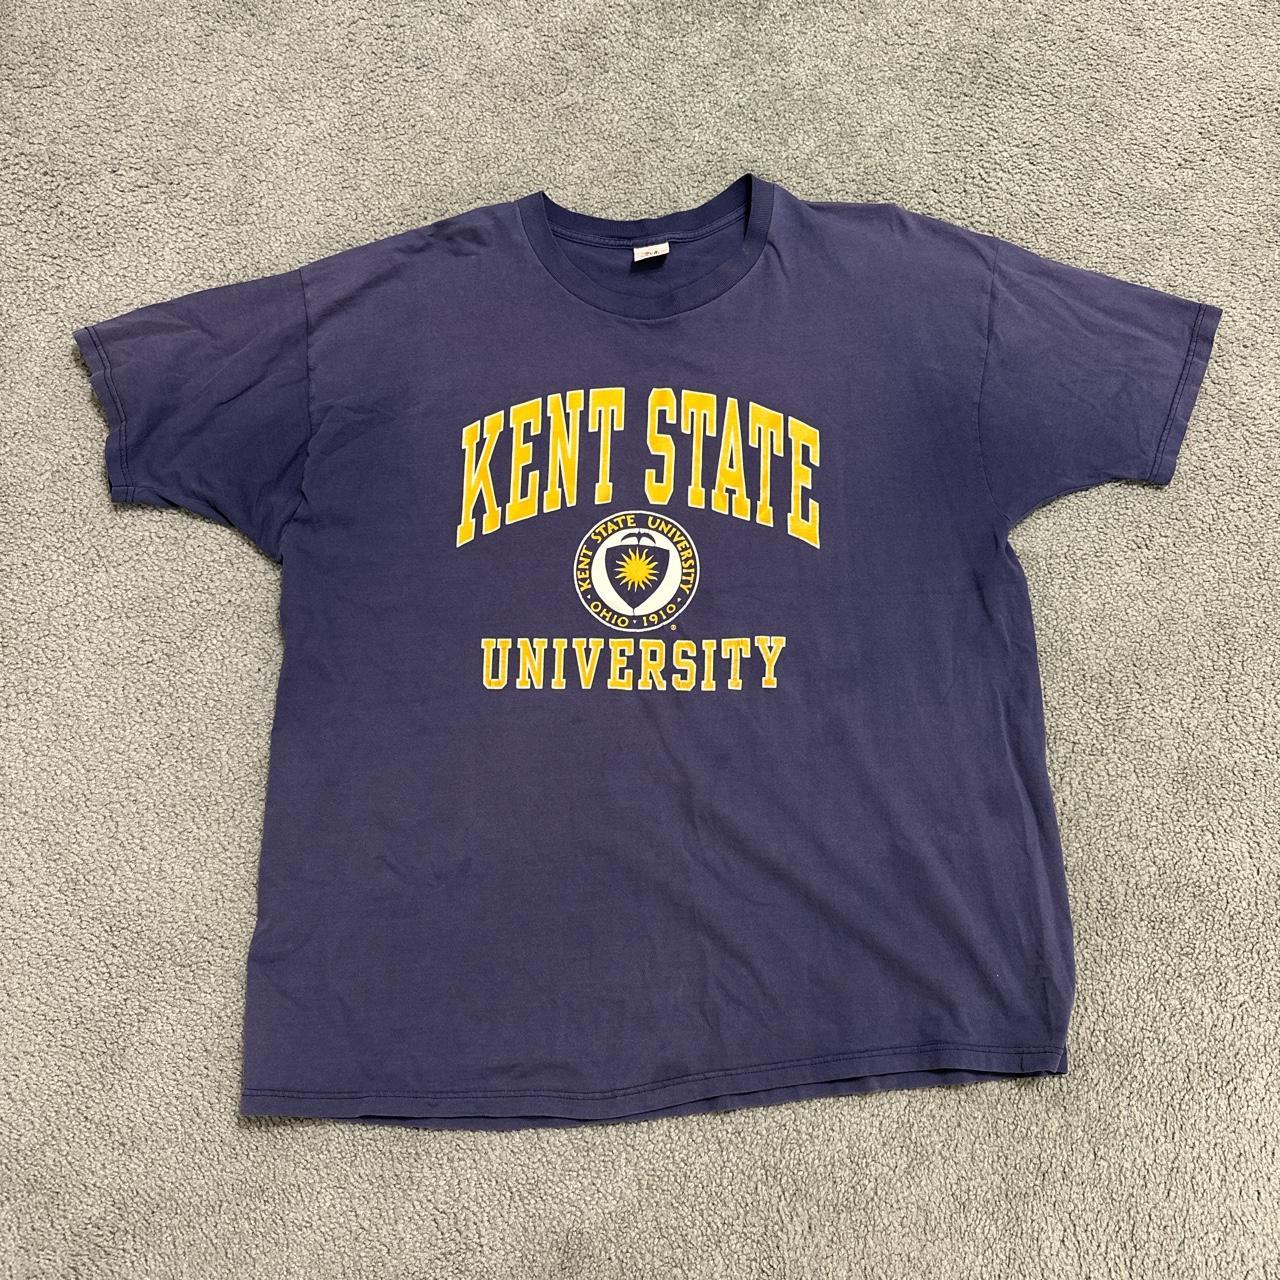 Vintage 90s Kent state university logo t shirt, made... - Depop